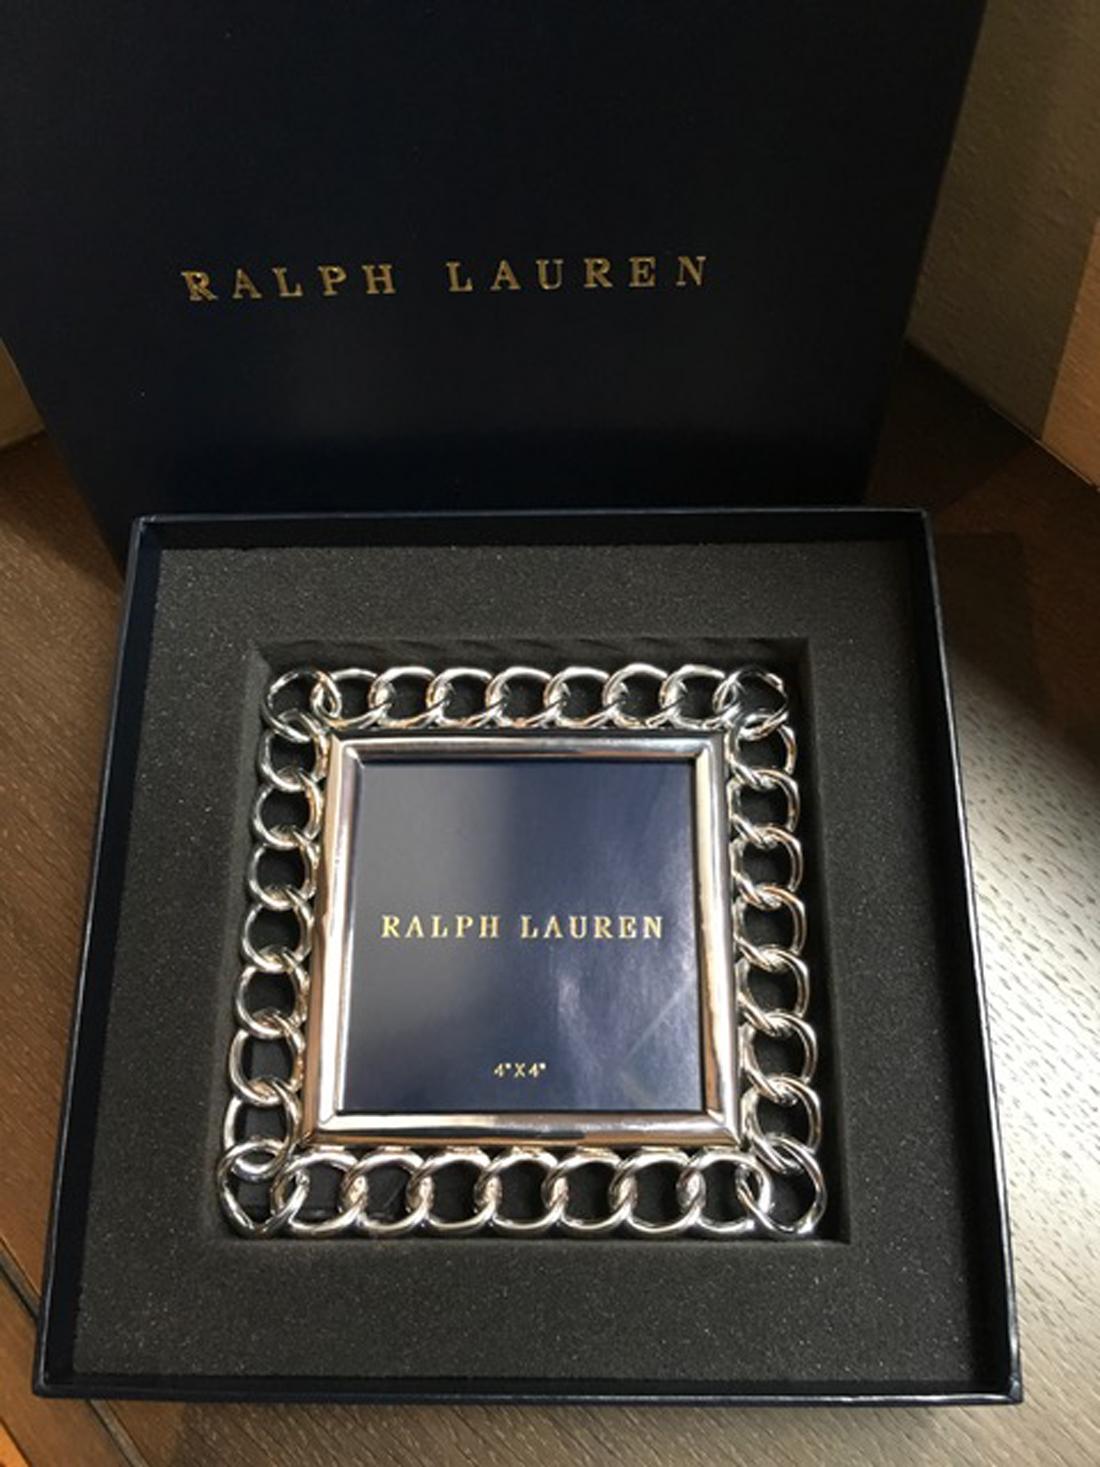 Ralph Lauren Modern Square Chain Chrome Accessories Desk Picture Frame in Stock 3